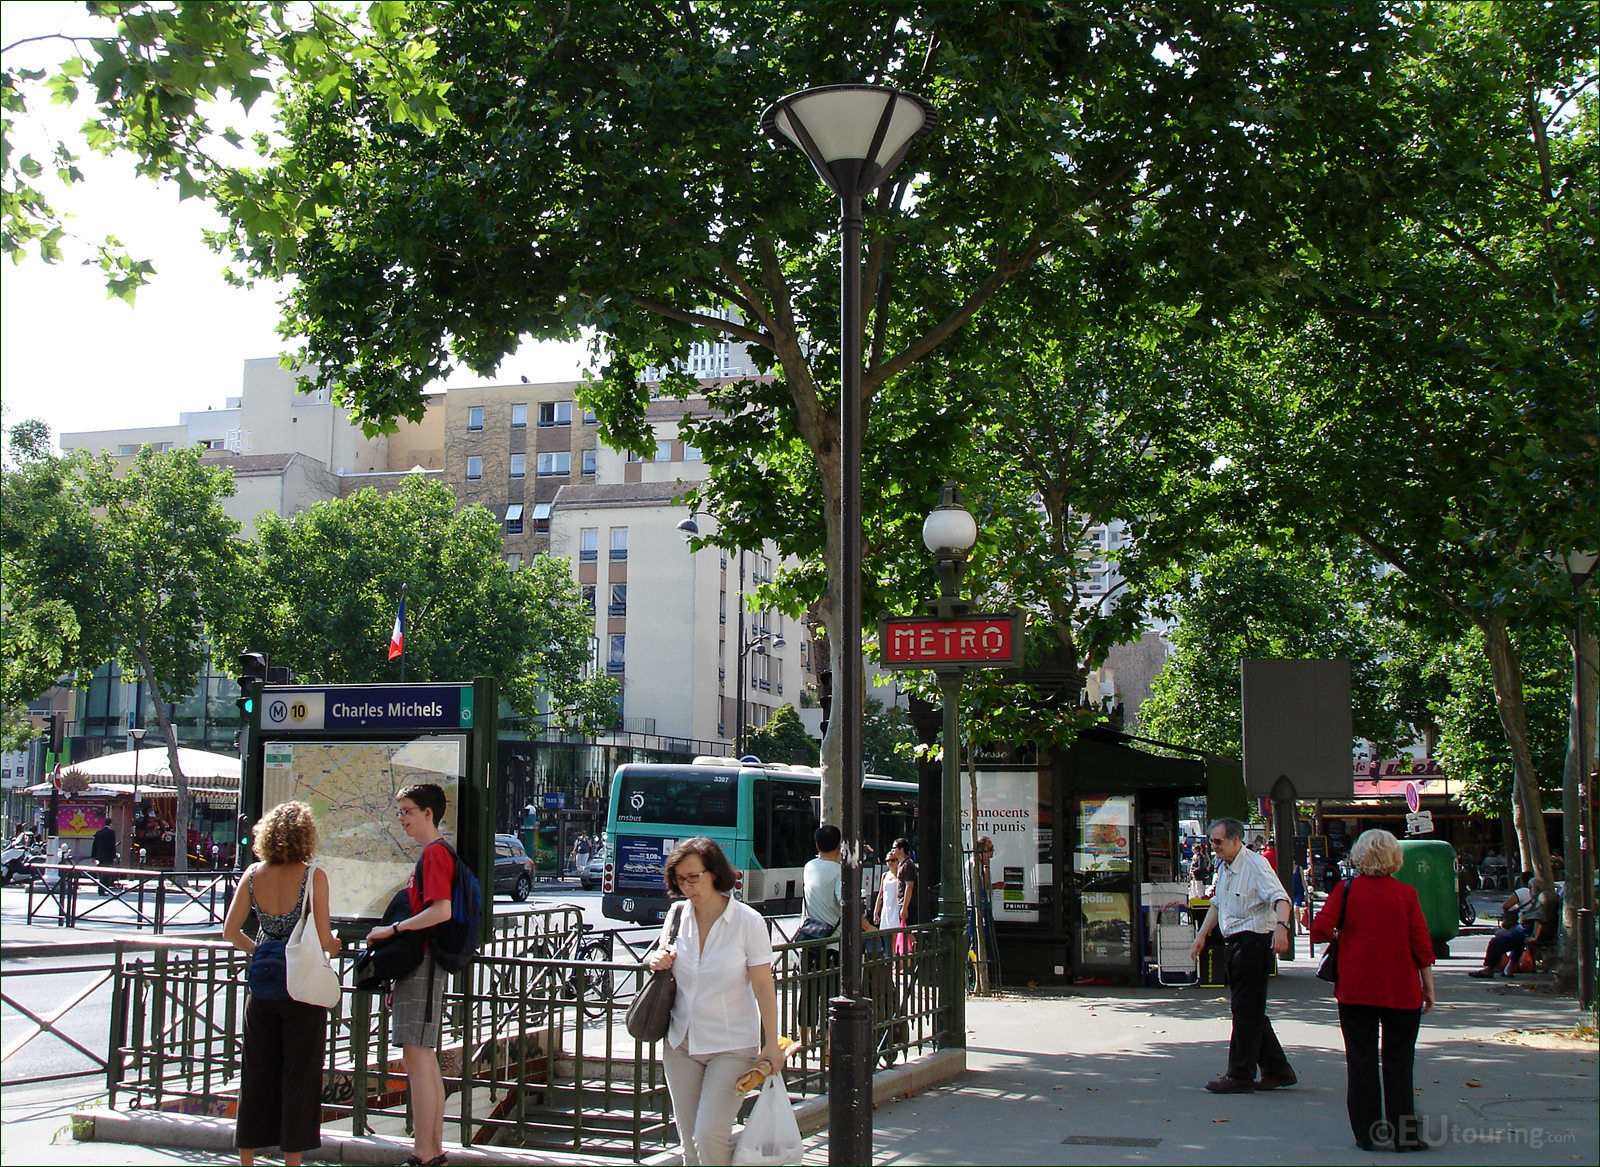 Photo Images Of The Paris Metro System - Image 11